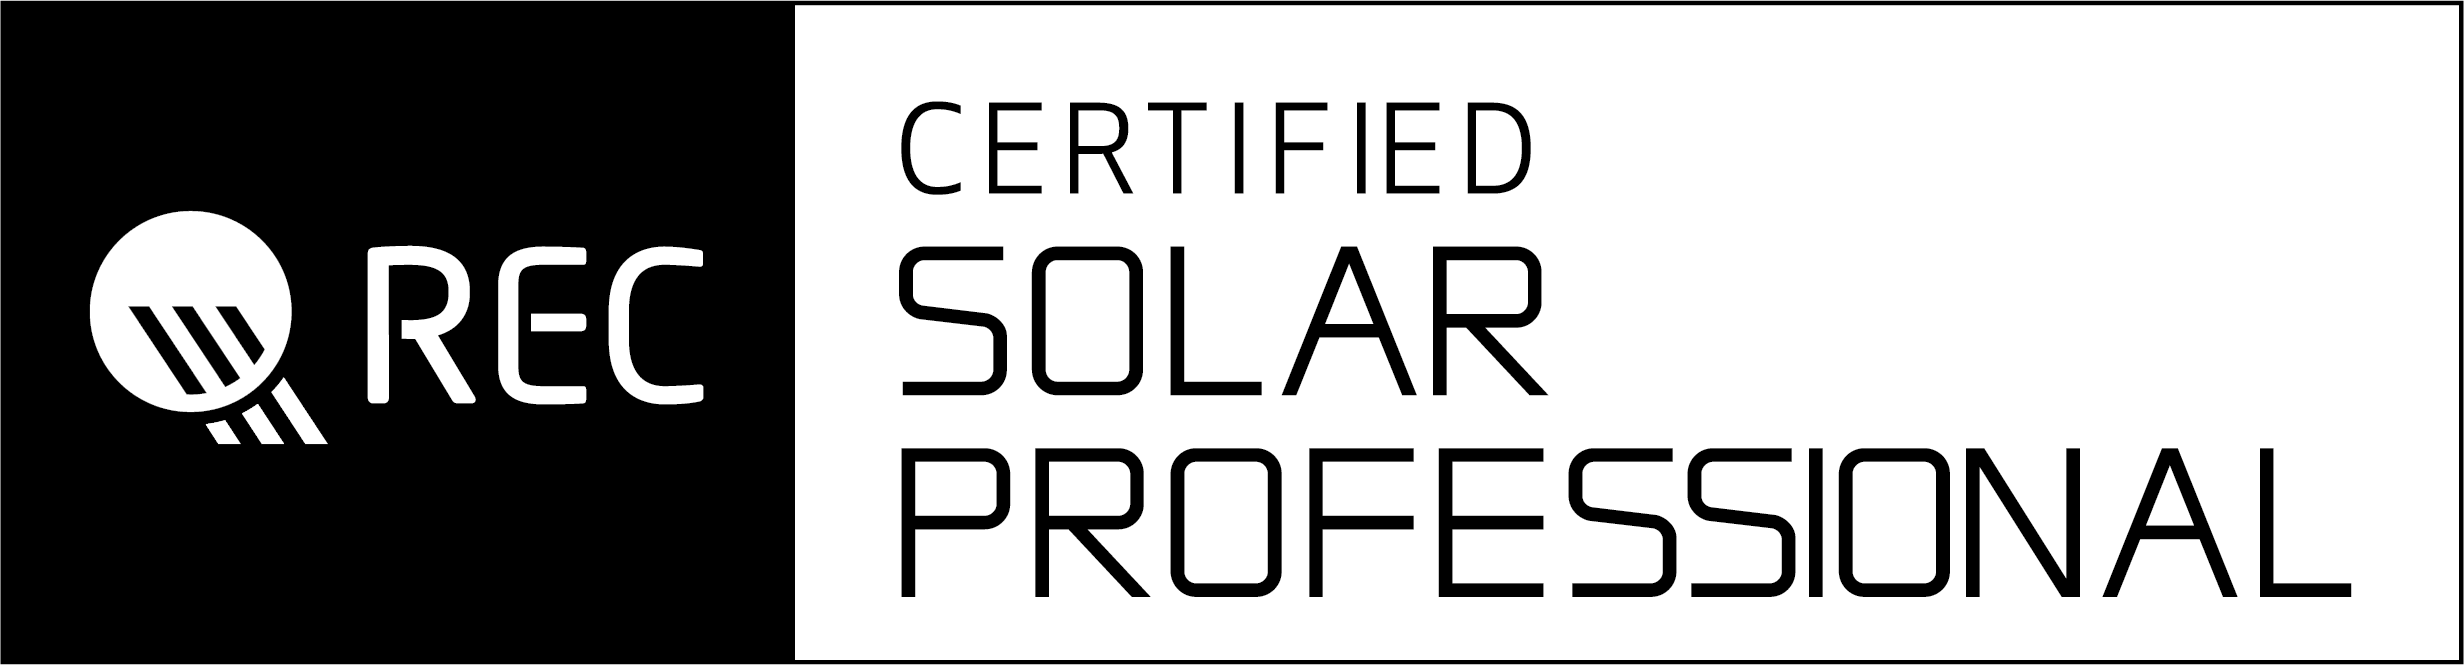 REC-certified-solar-pro-blackandwhite